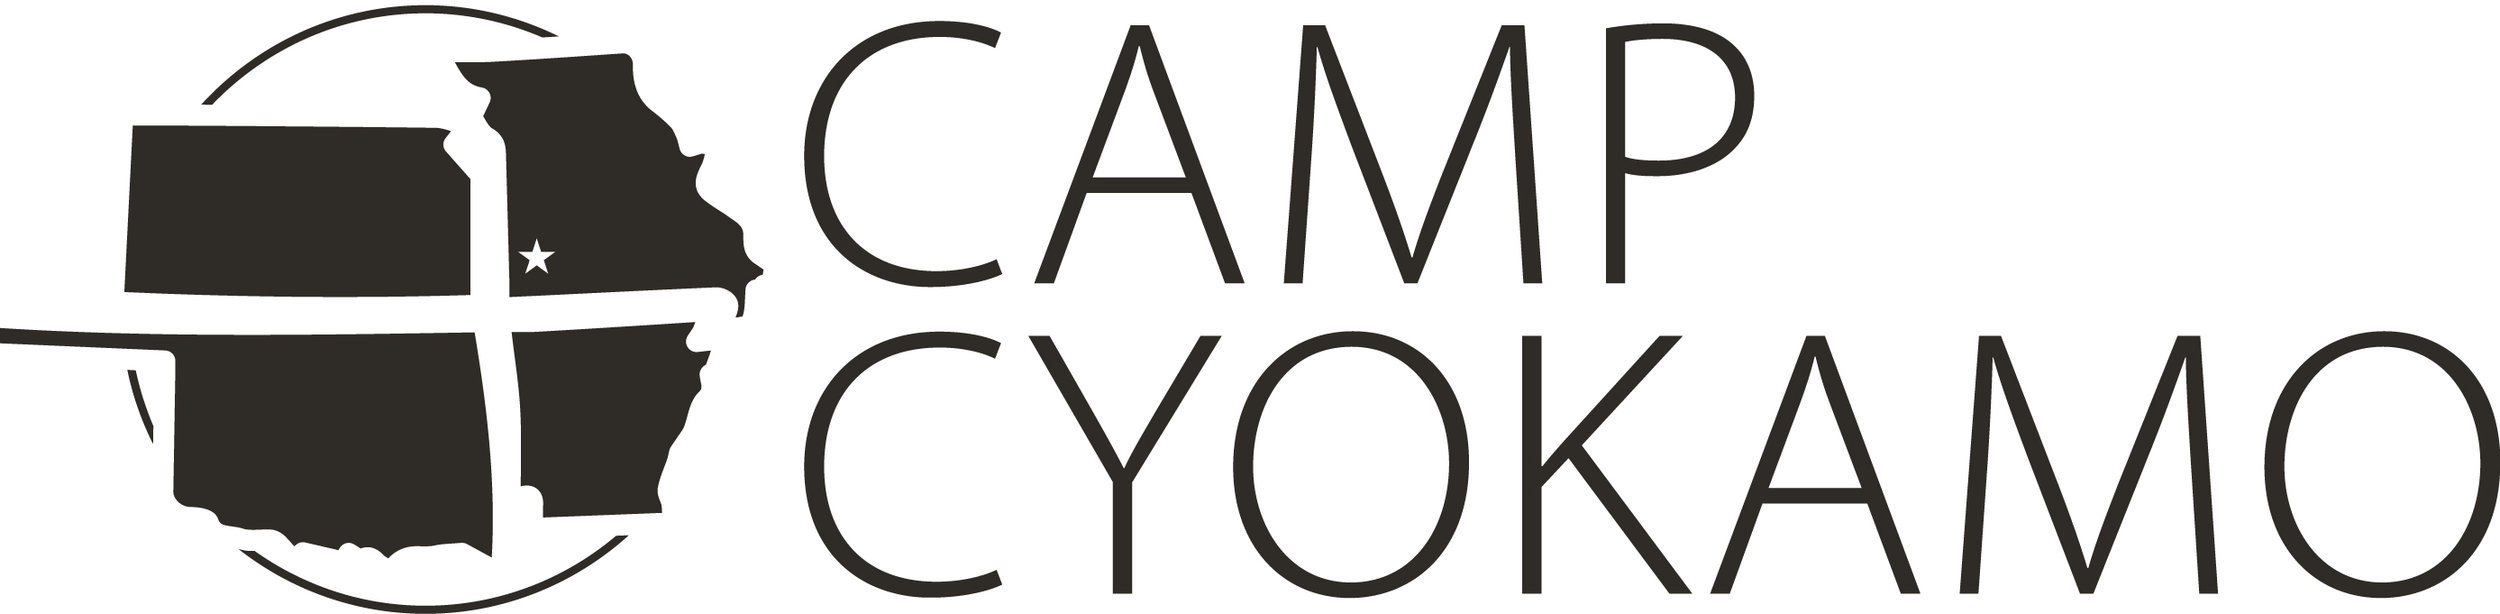 Camp Cyokamo Stacked (black) w star.jpg